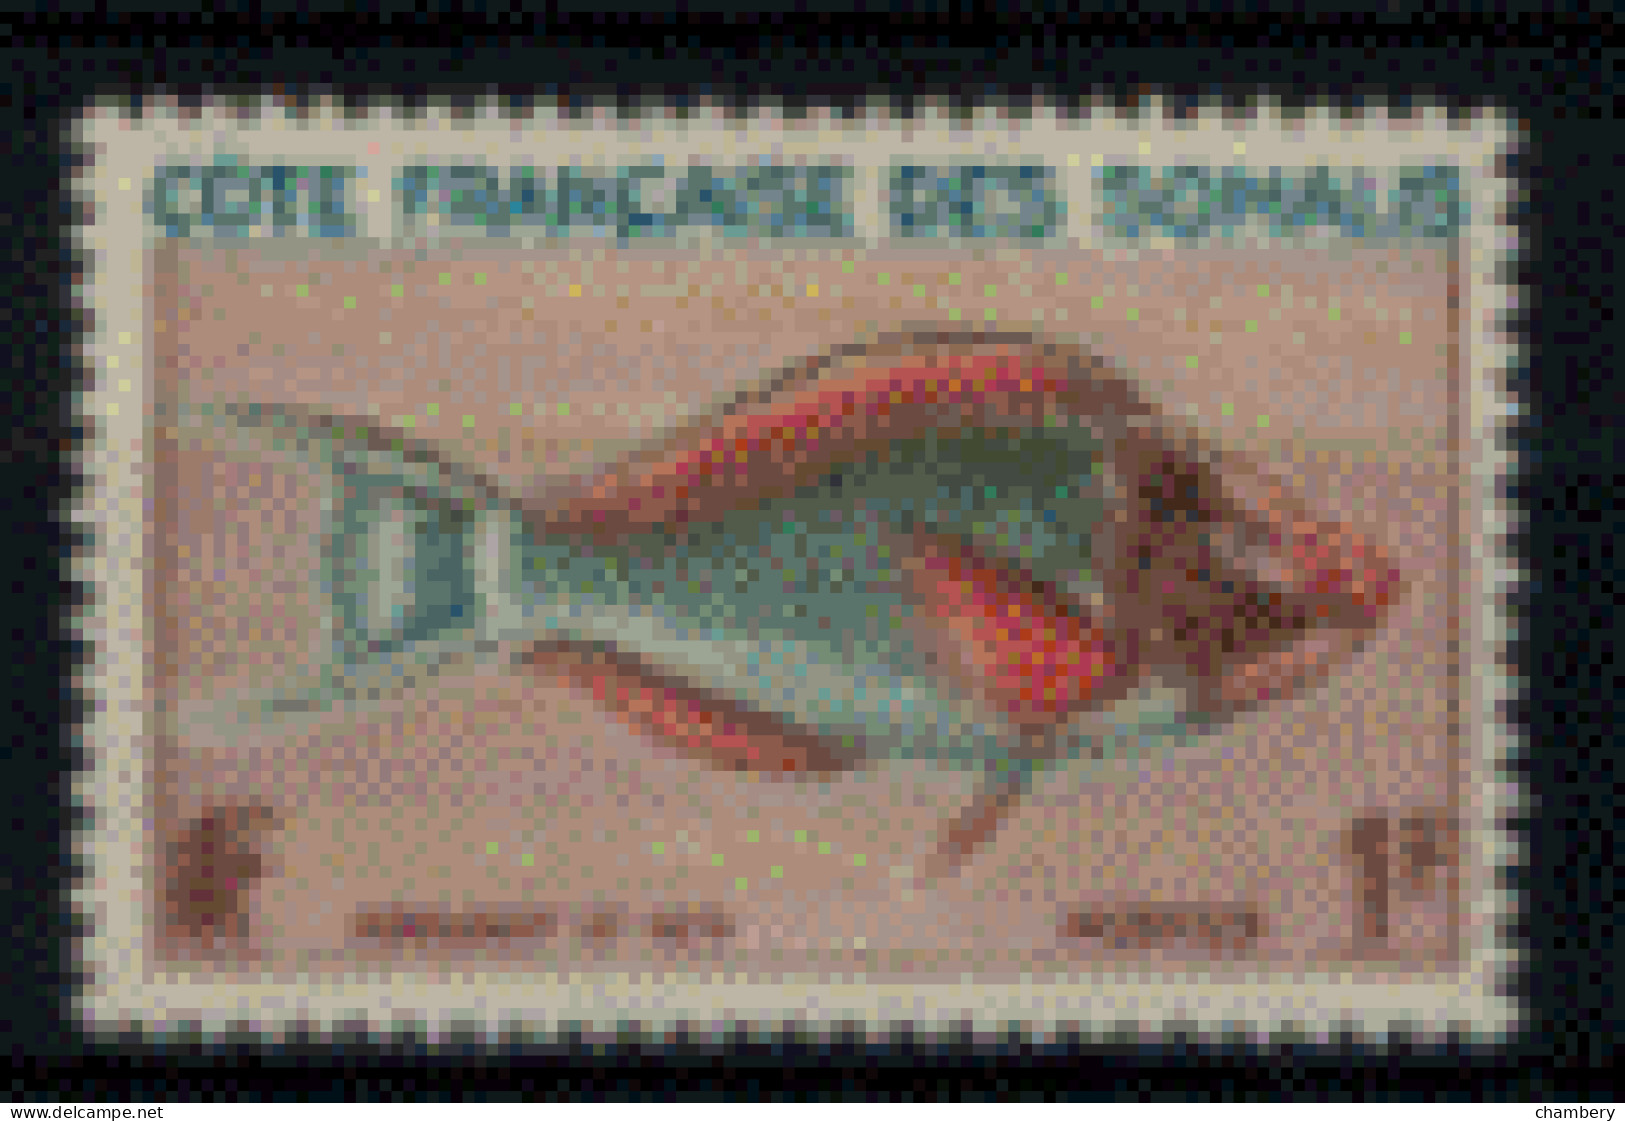 France - Somalies - "Poisson : Perroquet De Mer" - Neuf 1* N° 292 De 1959/60 - Unused Stamps